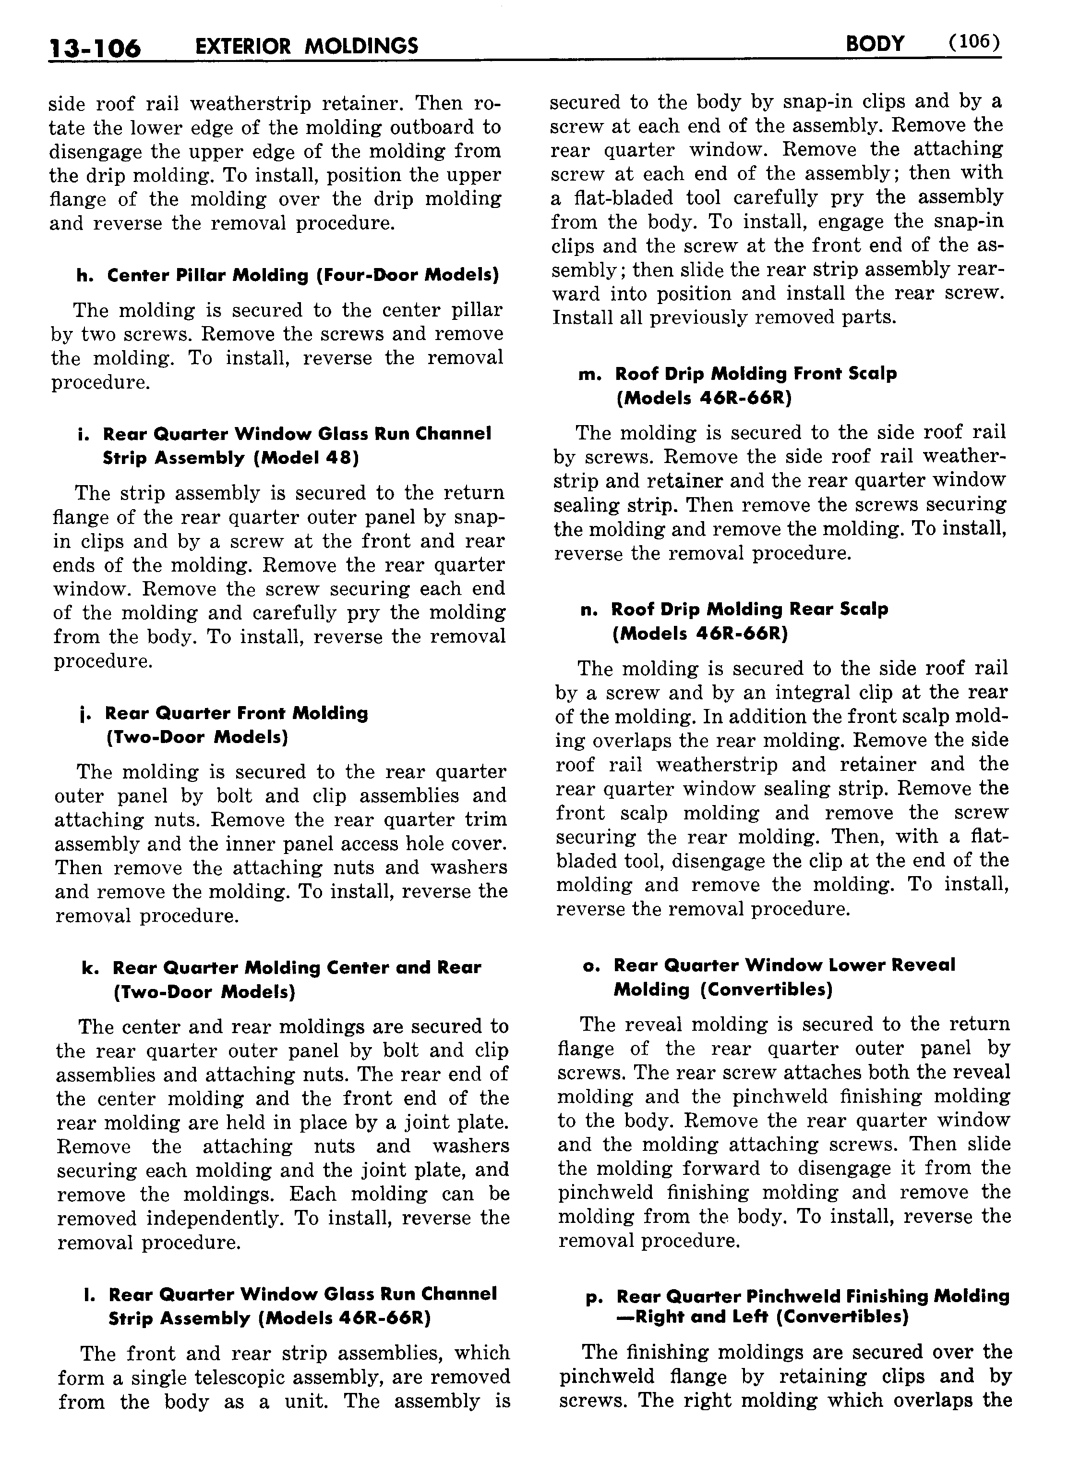 n_1957 Buick Body Service Manual-108-108.jpg